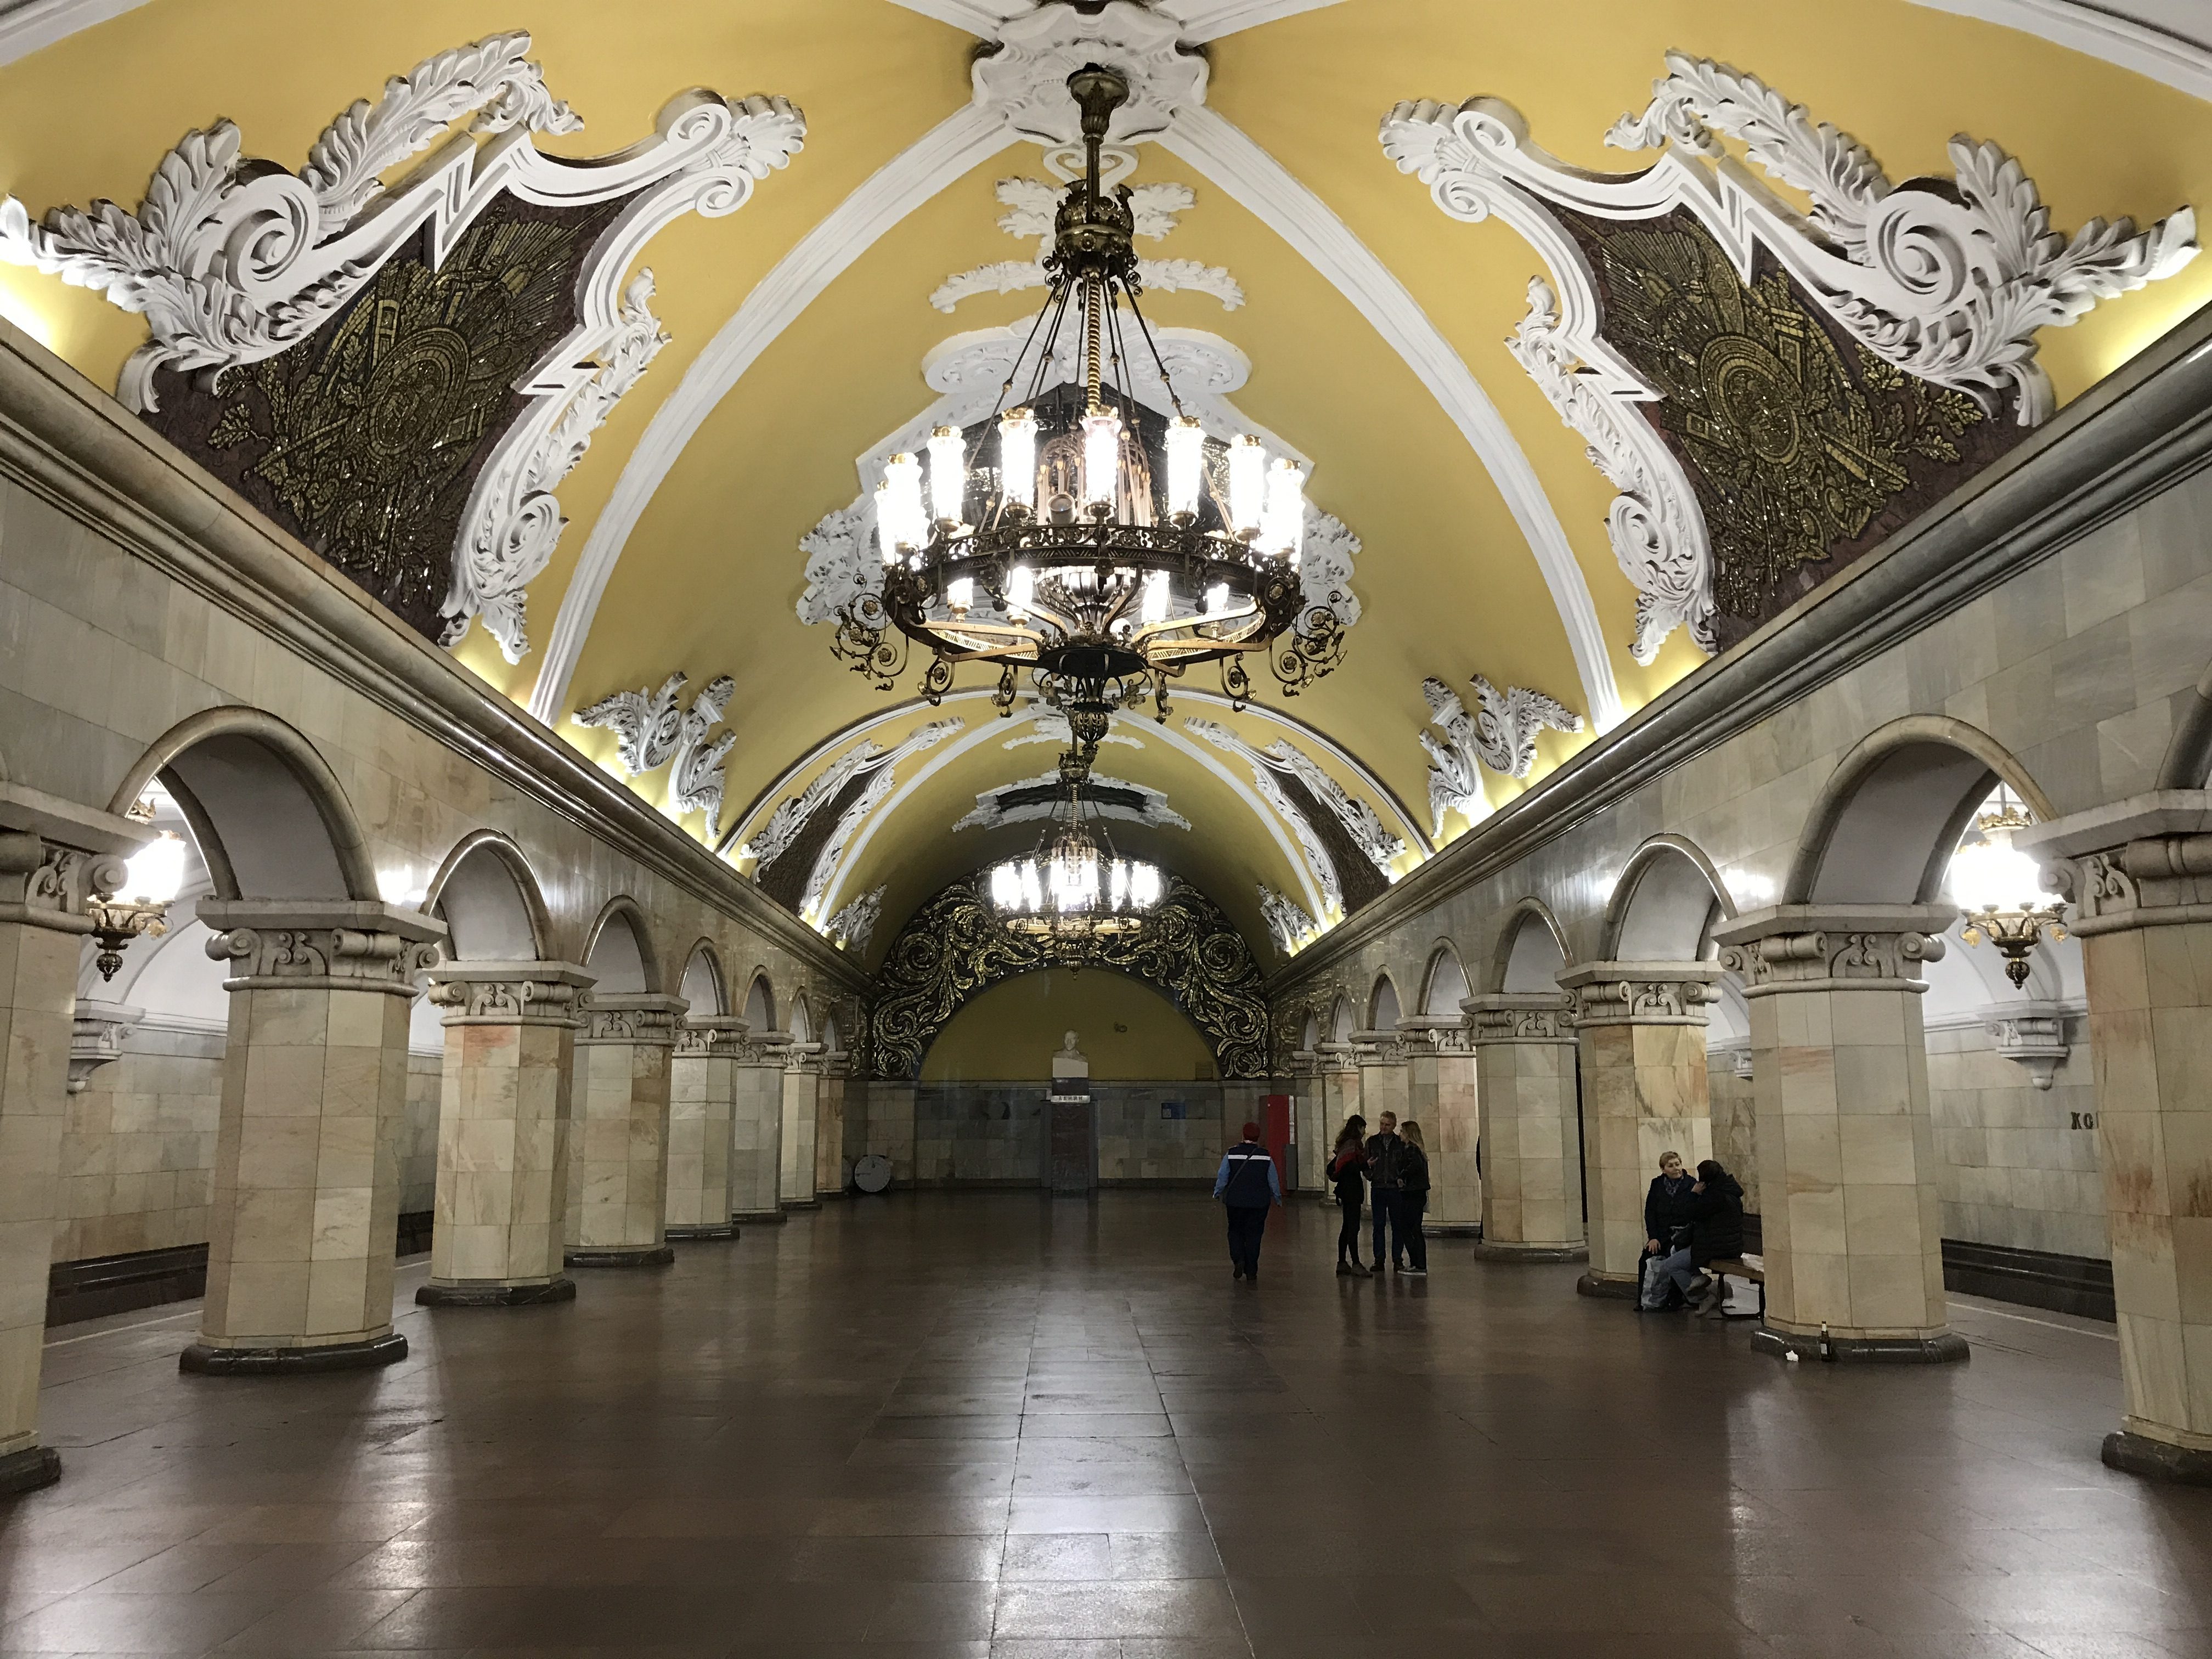 SubMundo de Moscovo – Metro de Moscovo